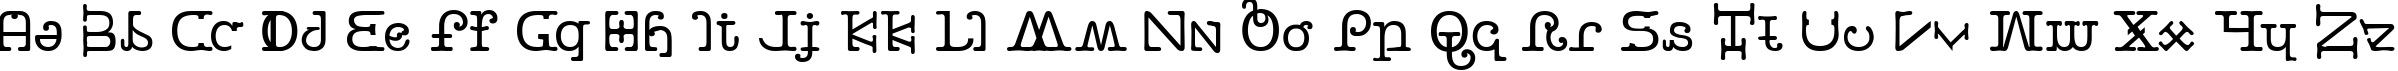 Пример написания английского алфавита шрифтом Beast vs Buttercrumb